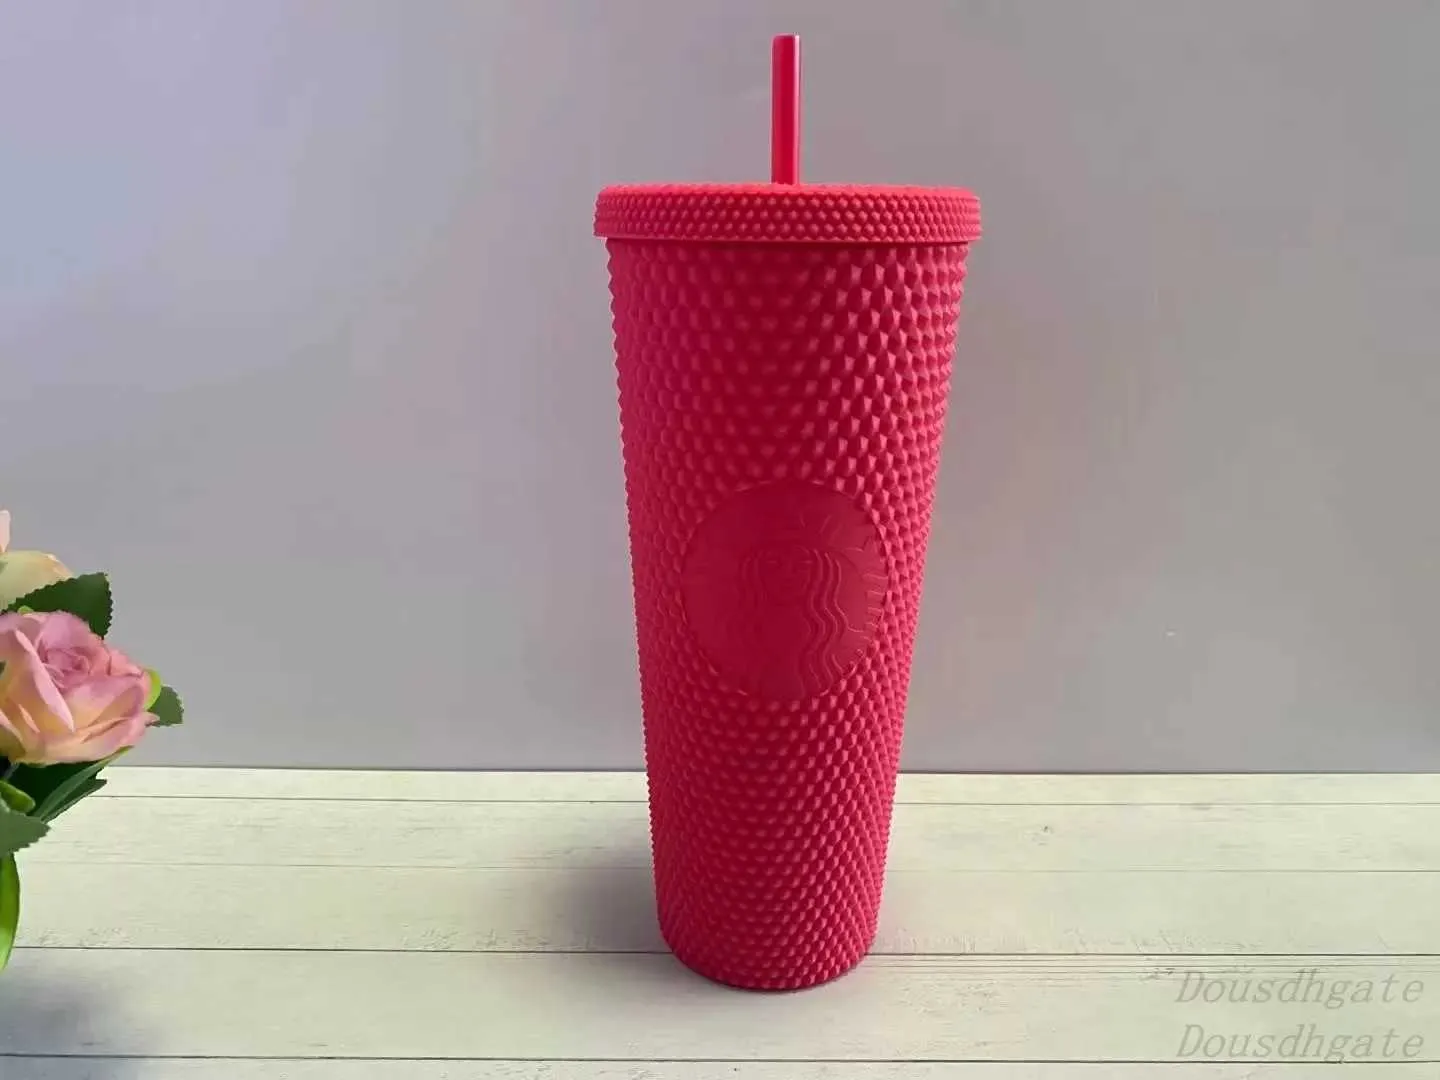 Starbucks sjöjungfru gudinna Studded Cup Tumblers 710 ml Carbie Pink Matte Black Plastic Mugs With Straw3123